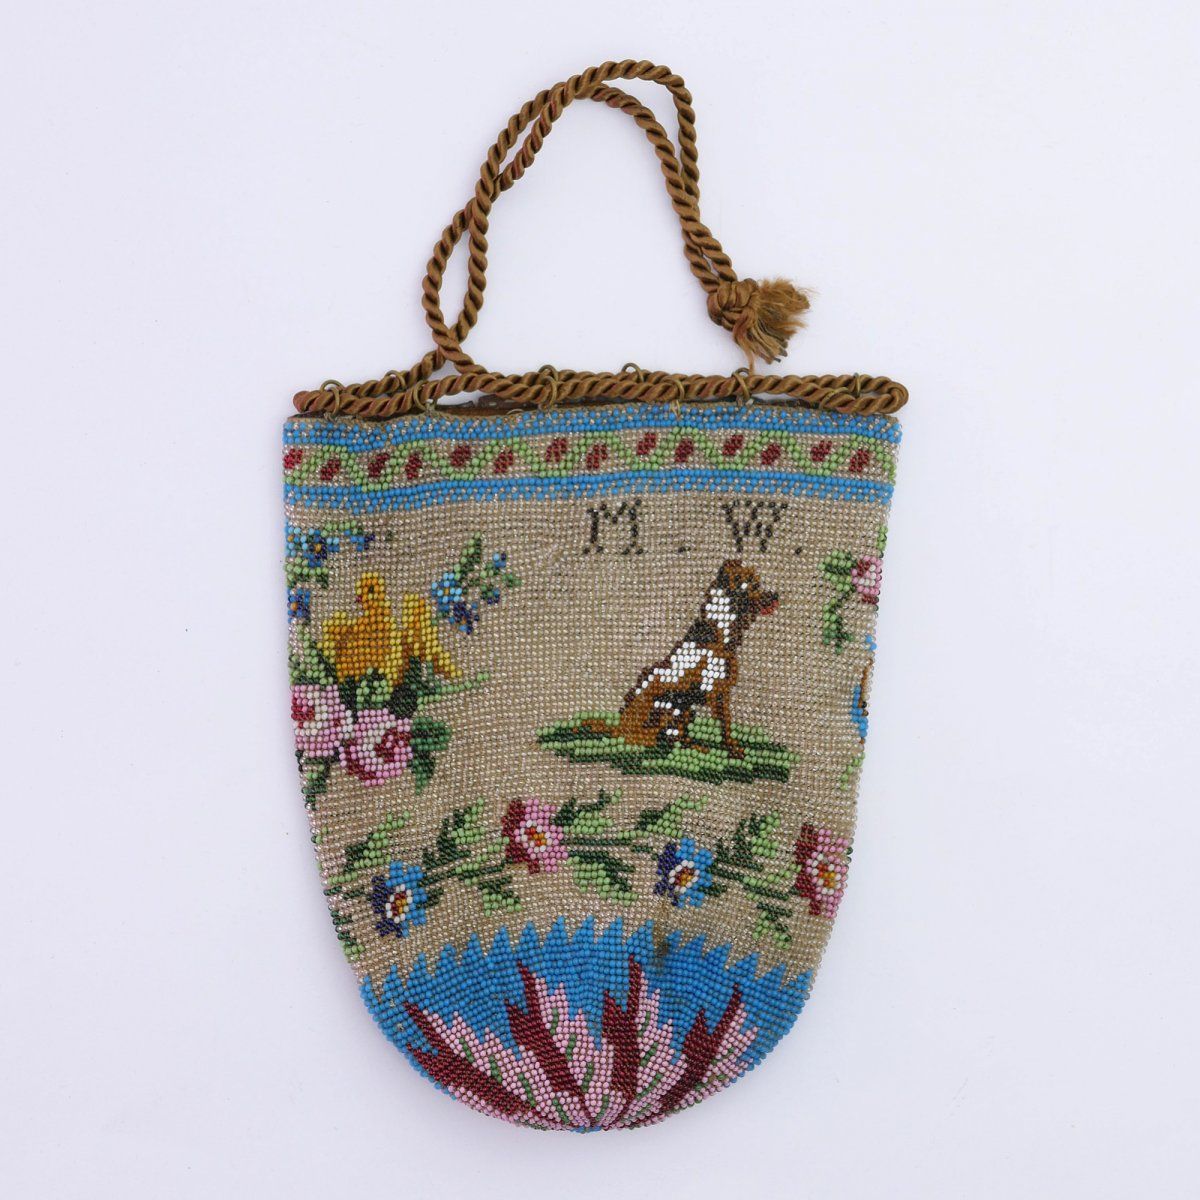 Null MW "烟草袋，有花和动物的图案，19世纪下半叶，高16 x 13厘米。钩织的多色珠子，皮革衬里，带铜眼的抽绳。